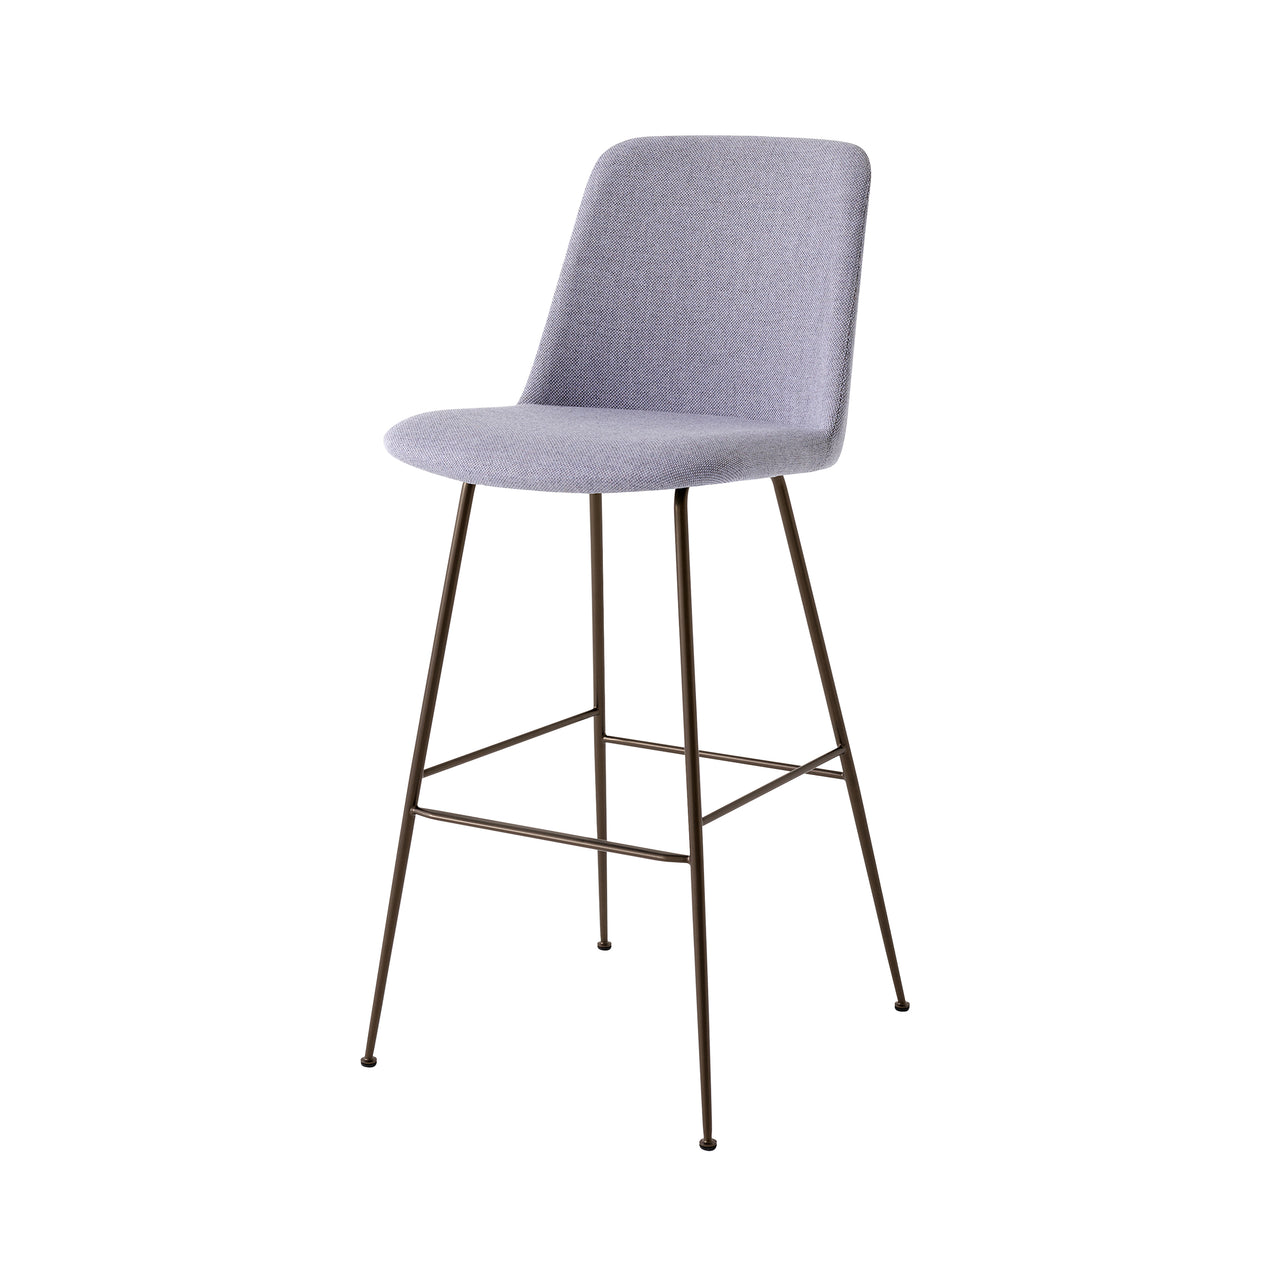 Rely Bar + Counter Highback Chair: HW93 + HW98 + Bar (HW98) + Bronzed